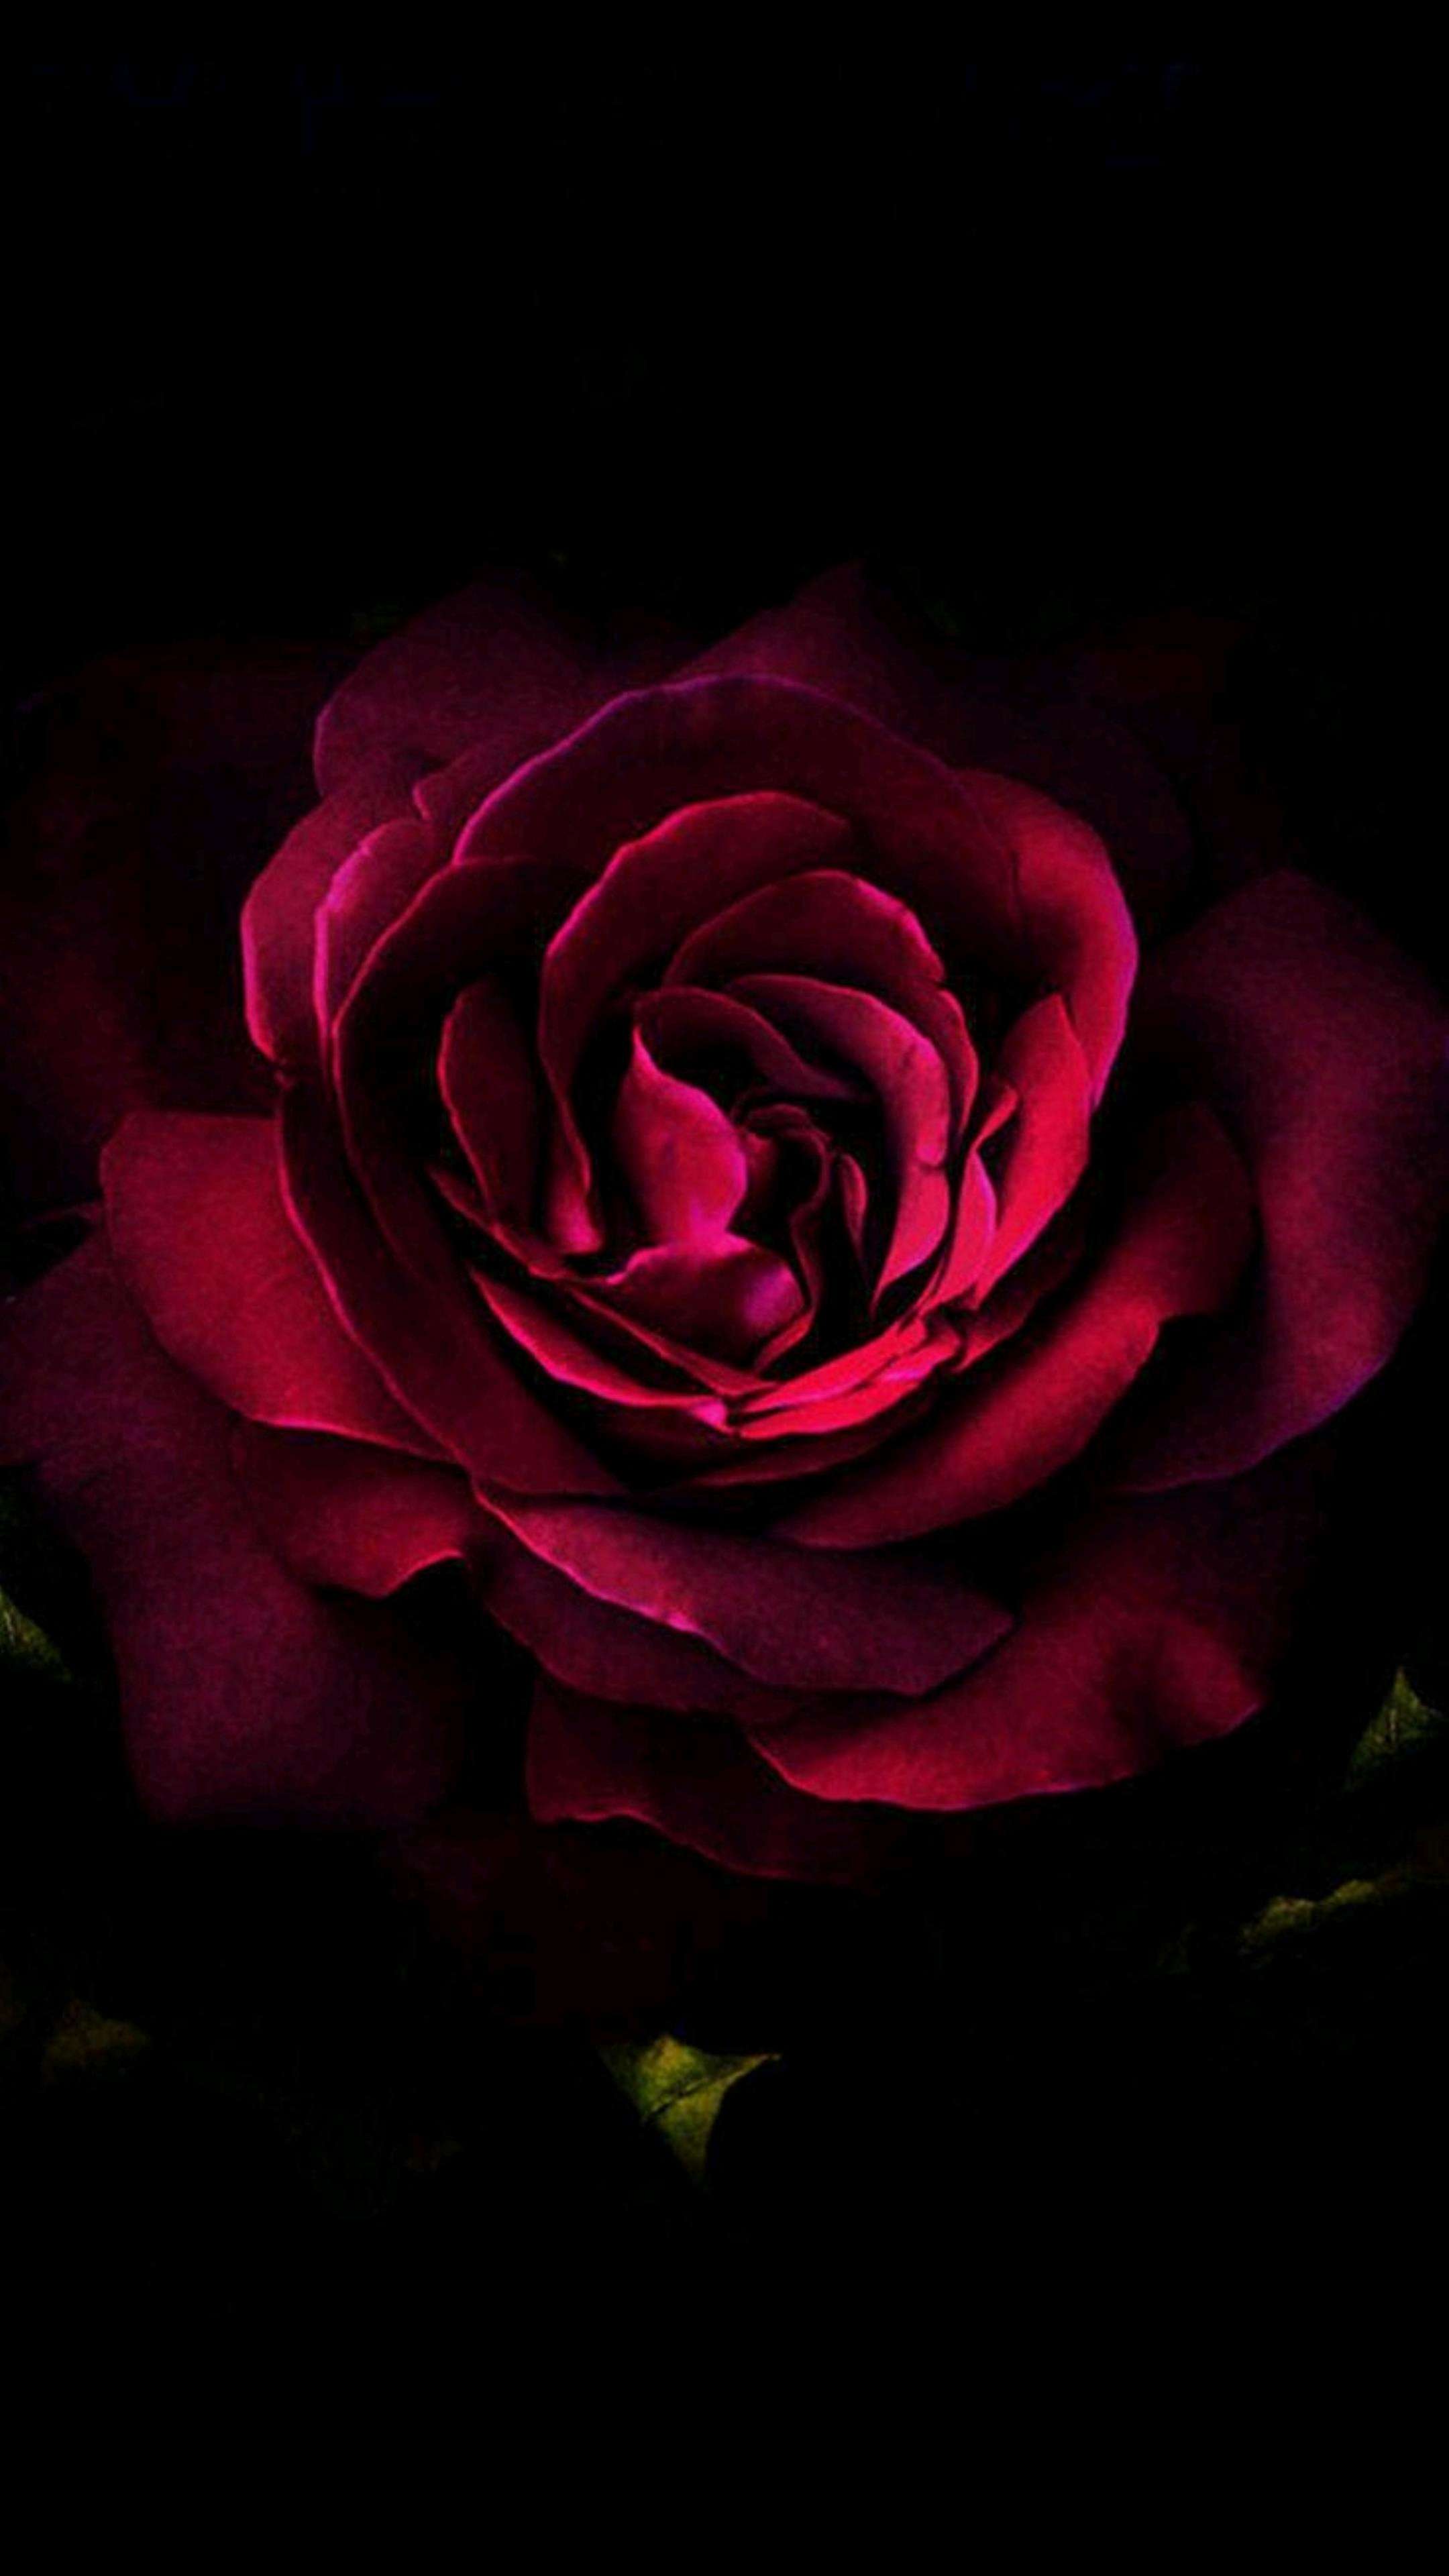 Deep red rose 4K wallpaper download